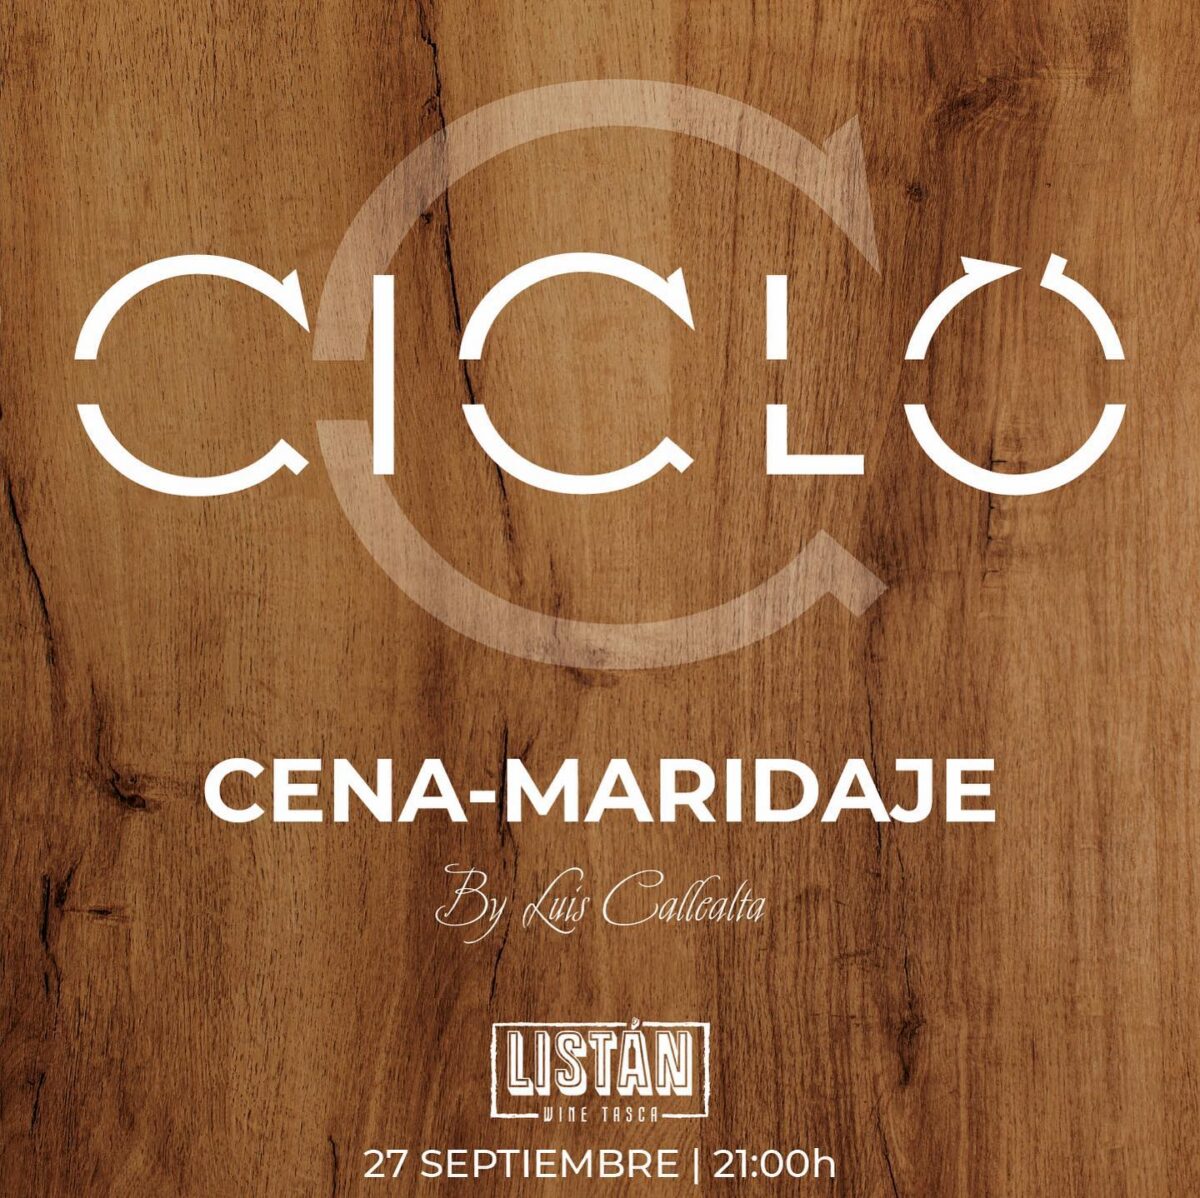 Cena Maridaje Restaurante Ciclo - Listan Wine Tasca en Cádiz